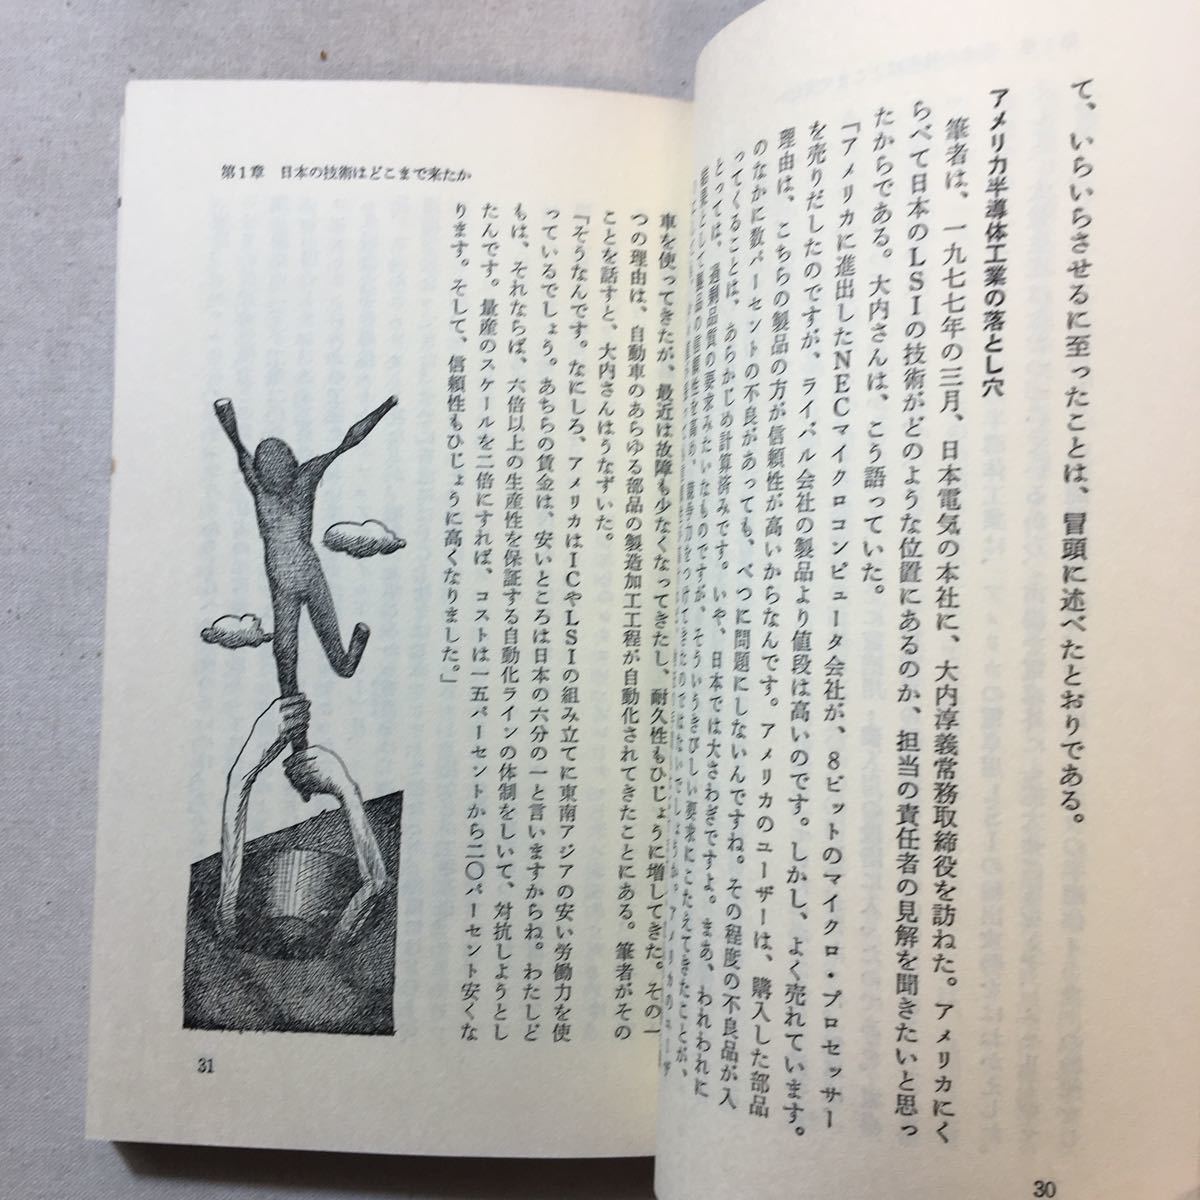 zaa-291♪もはや技術なし―アメリカの焦燥、西欧の憂うつ、日本の混乱 (カッパビジネス) 新書 1978/2/1 星野 芳郎 (著)